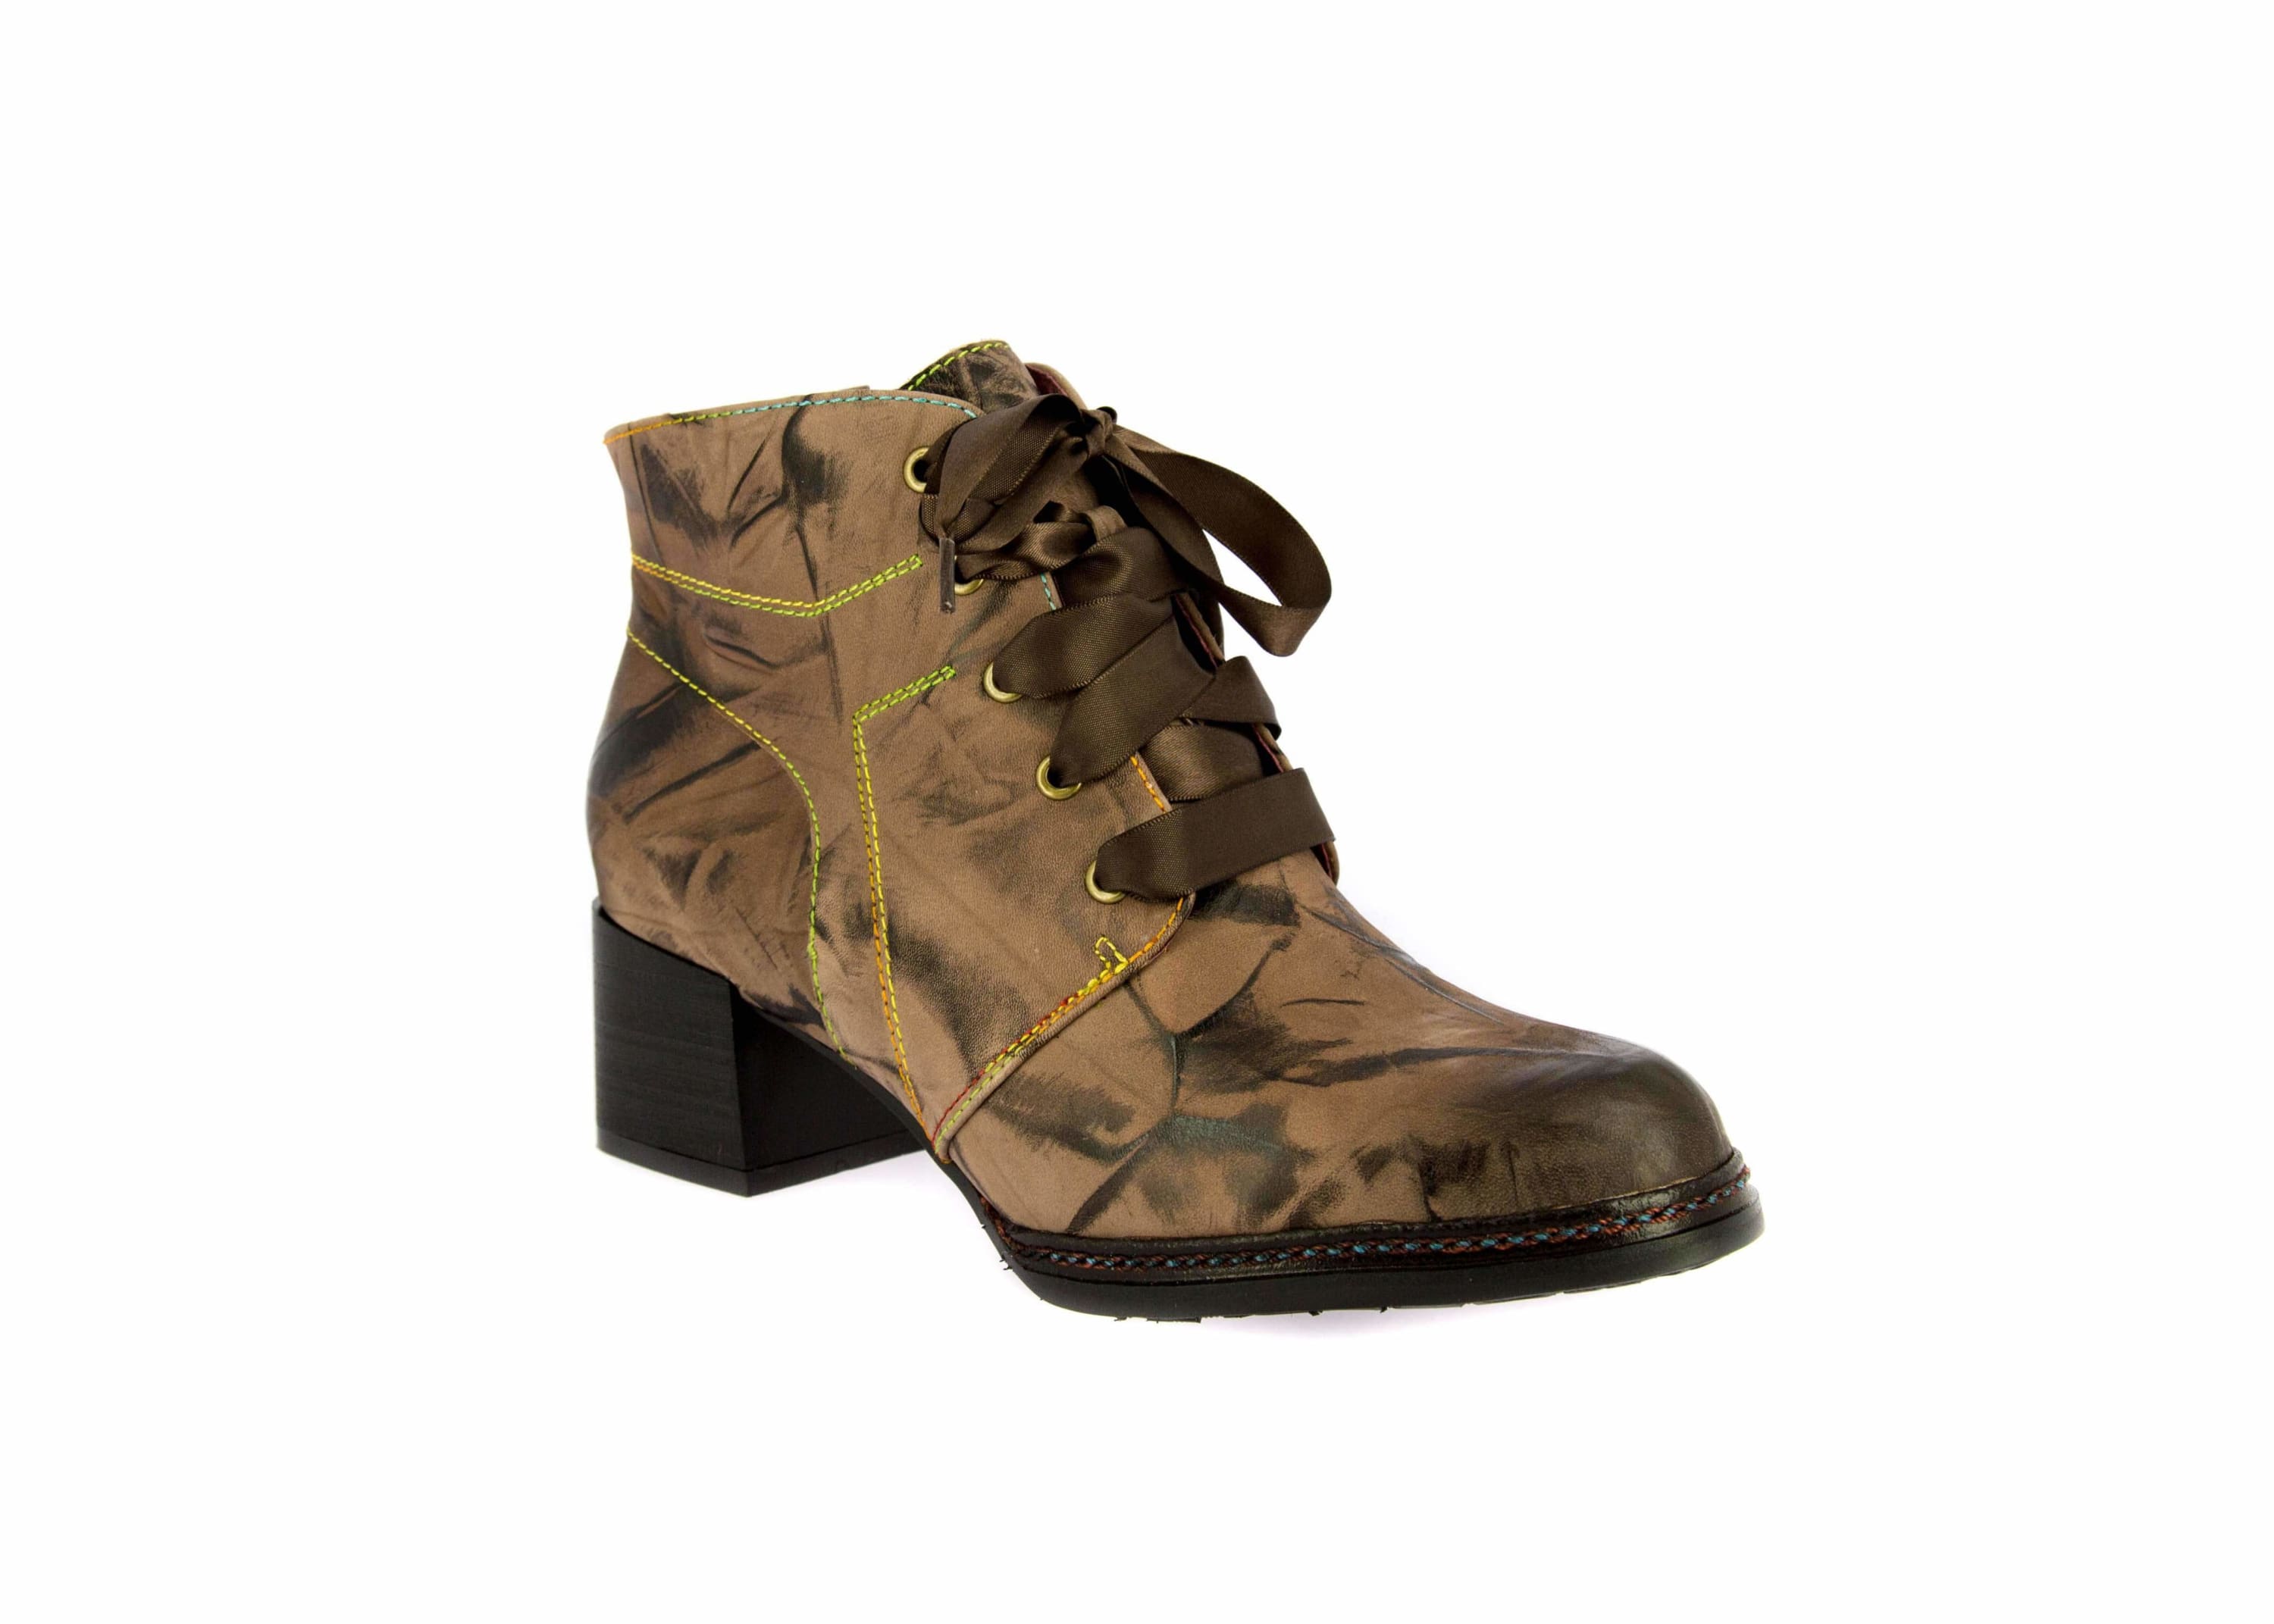 Shoe ETAPLES 05 - Boot